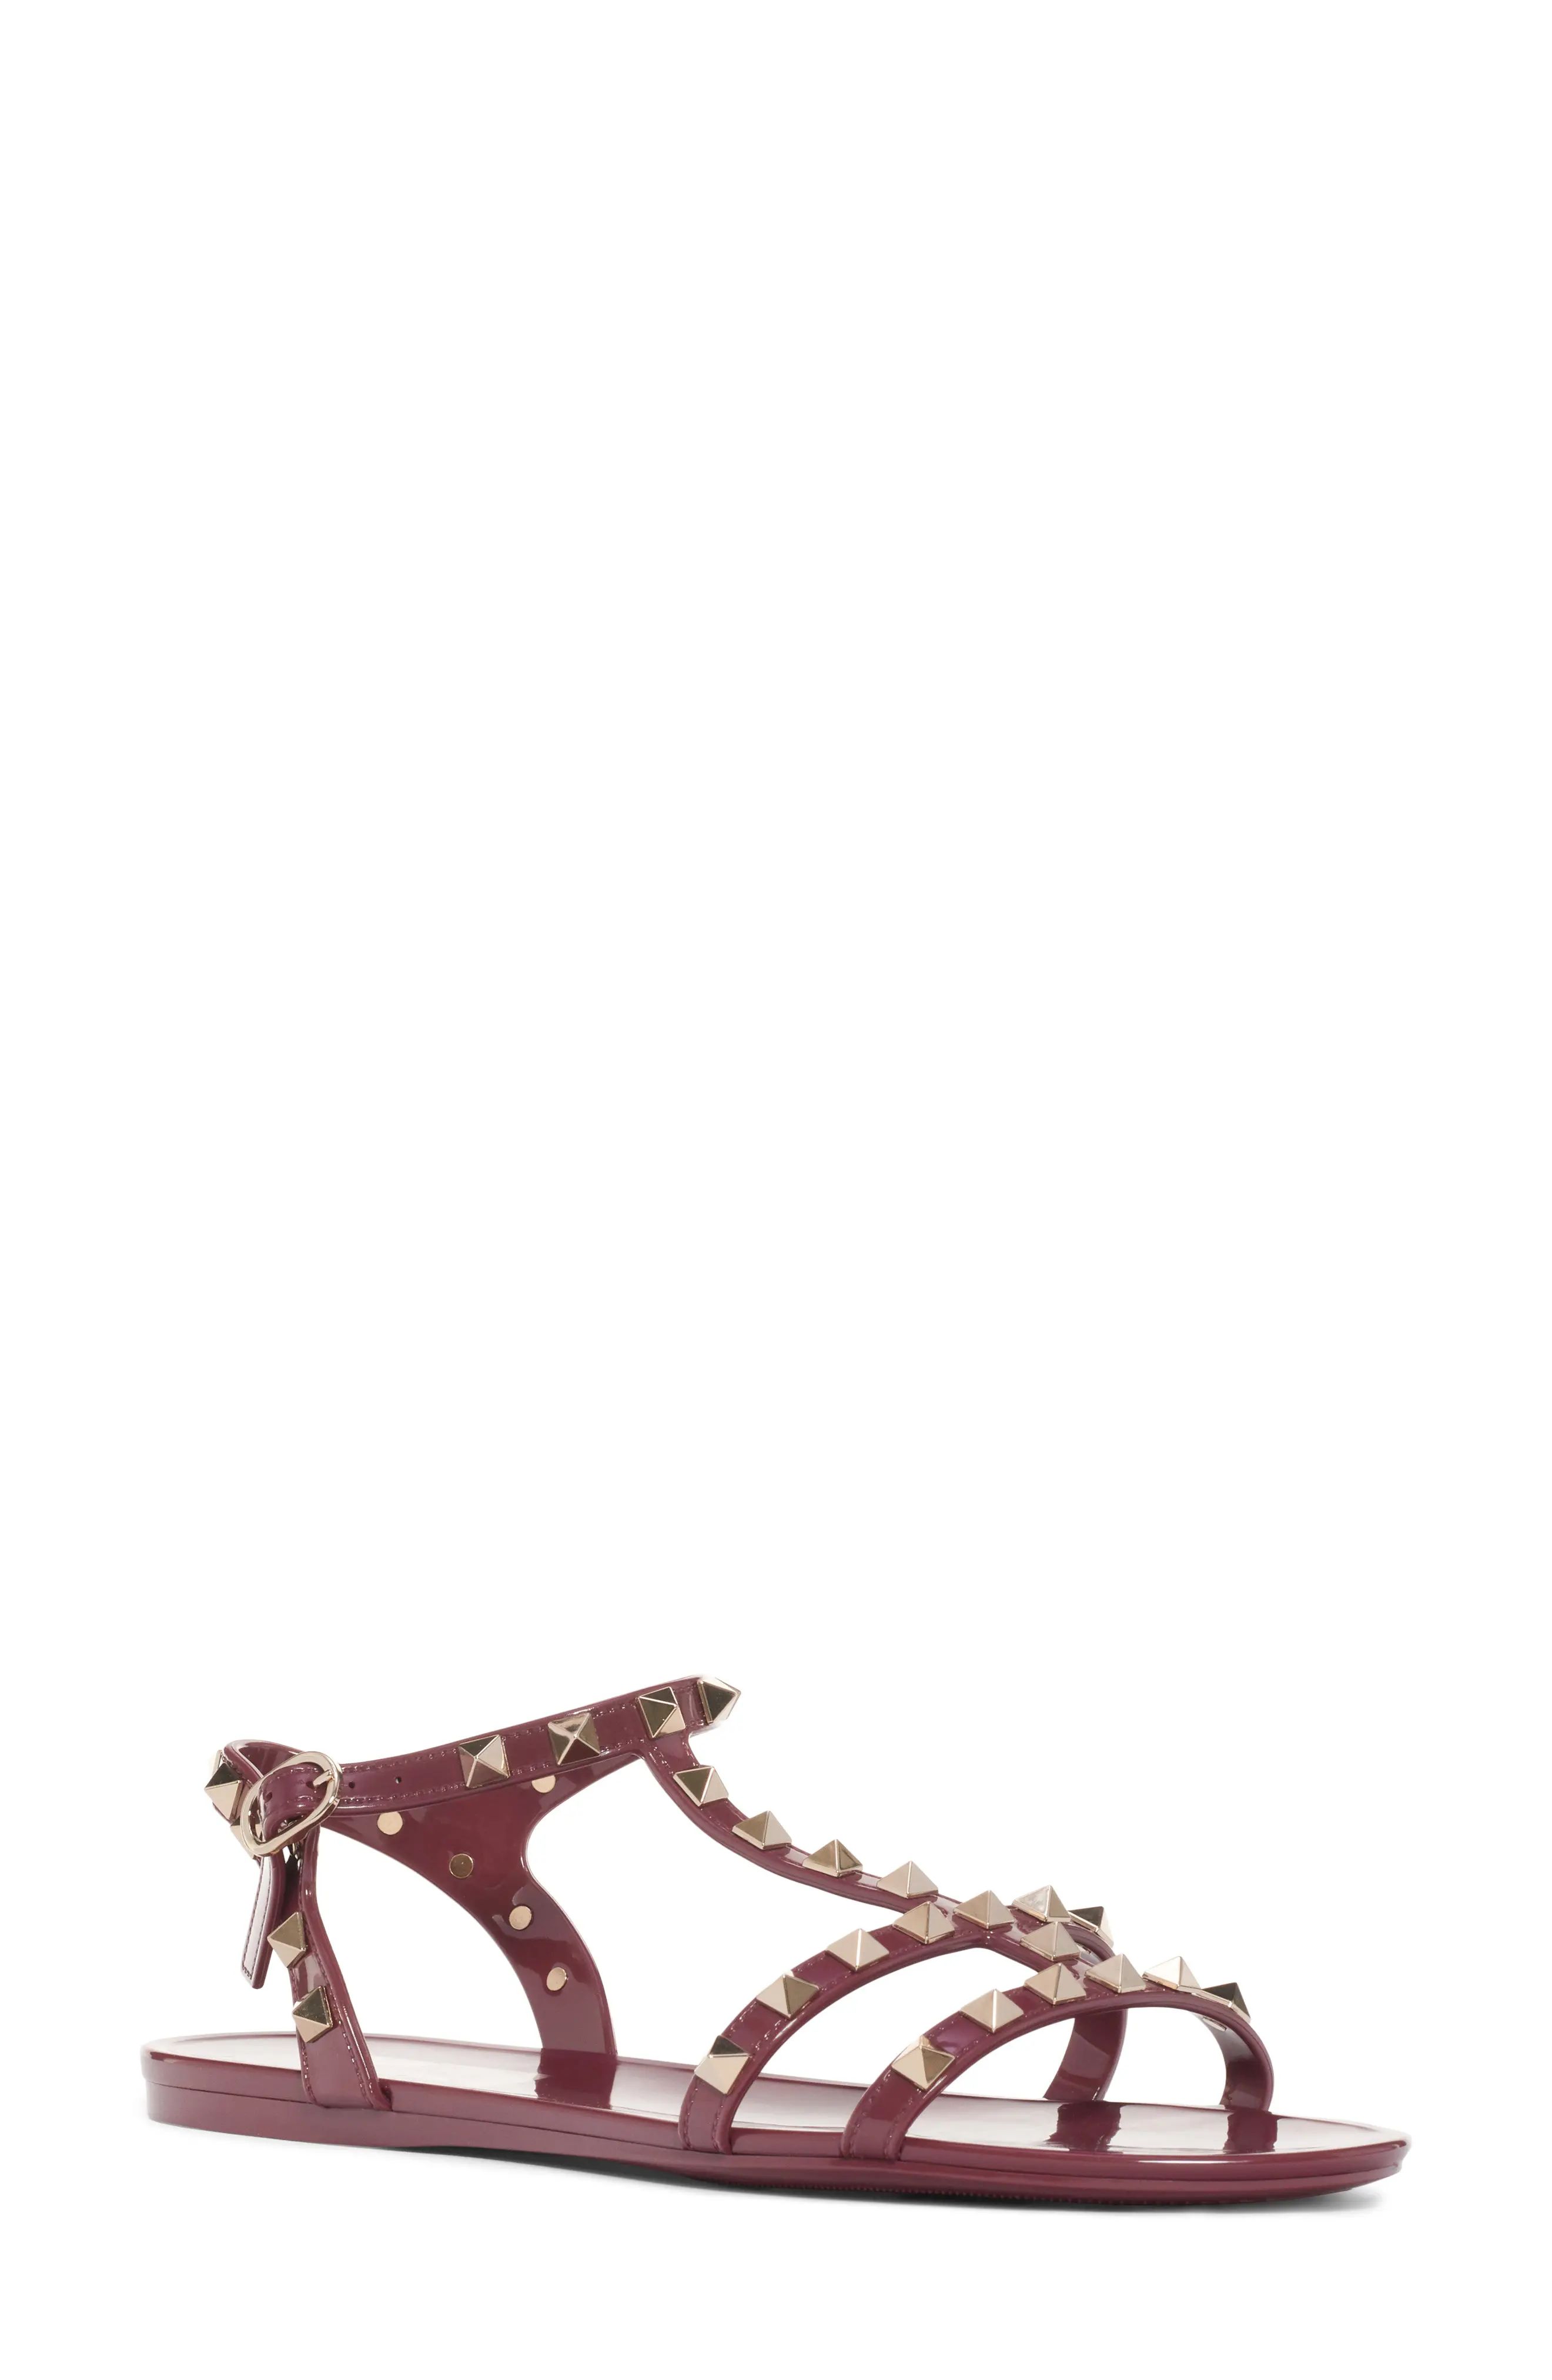 Women's Valentino Garavani Rockstud Sandal, Size 6US - Burgundy | Nordstrom